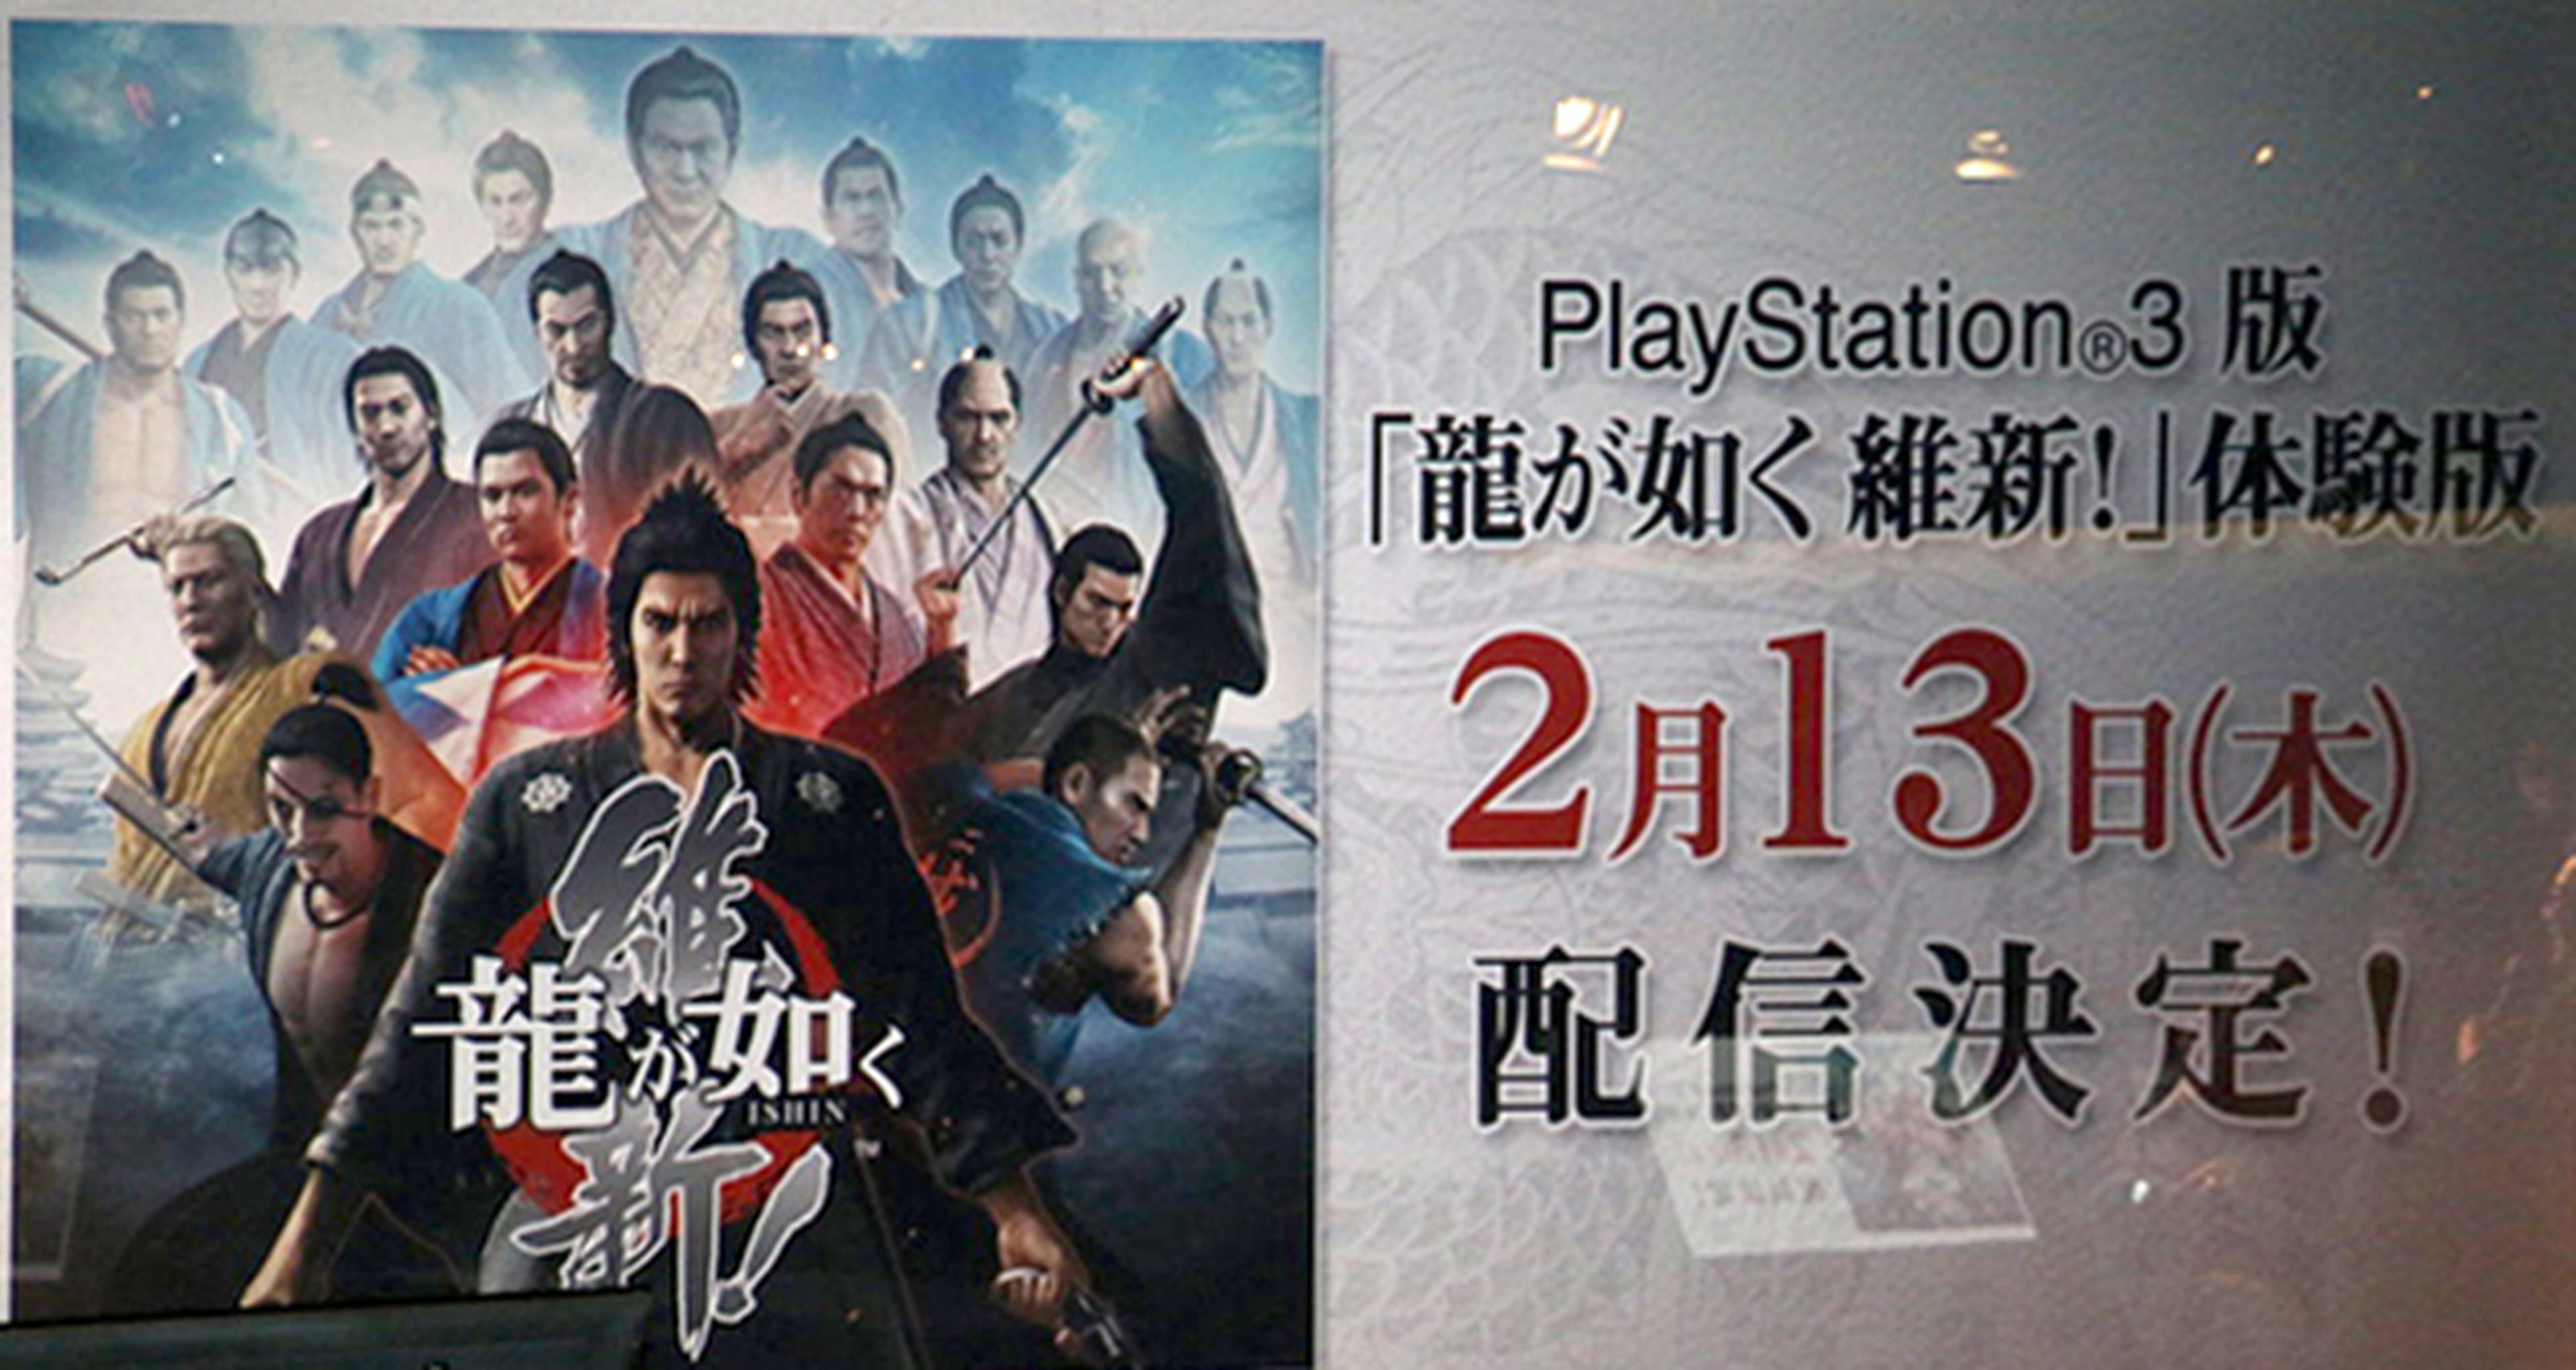 Yakuza Ishin tendrá demo japonesa en PS3